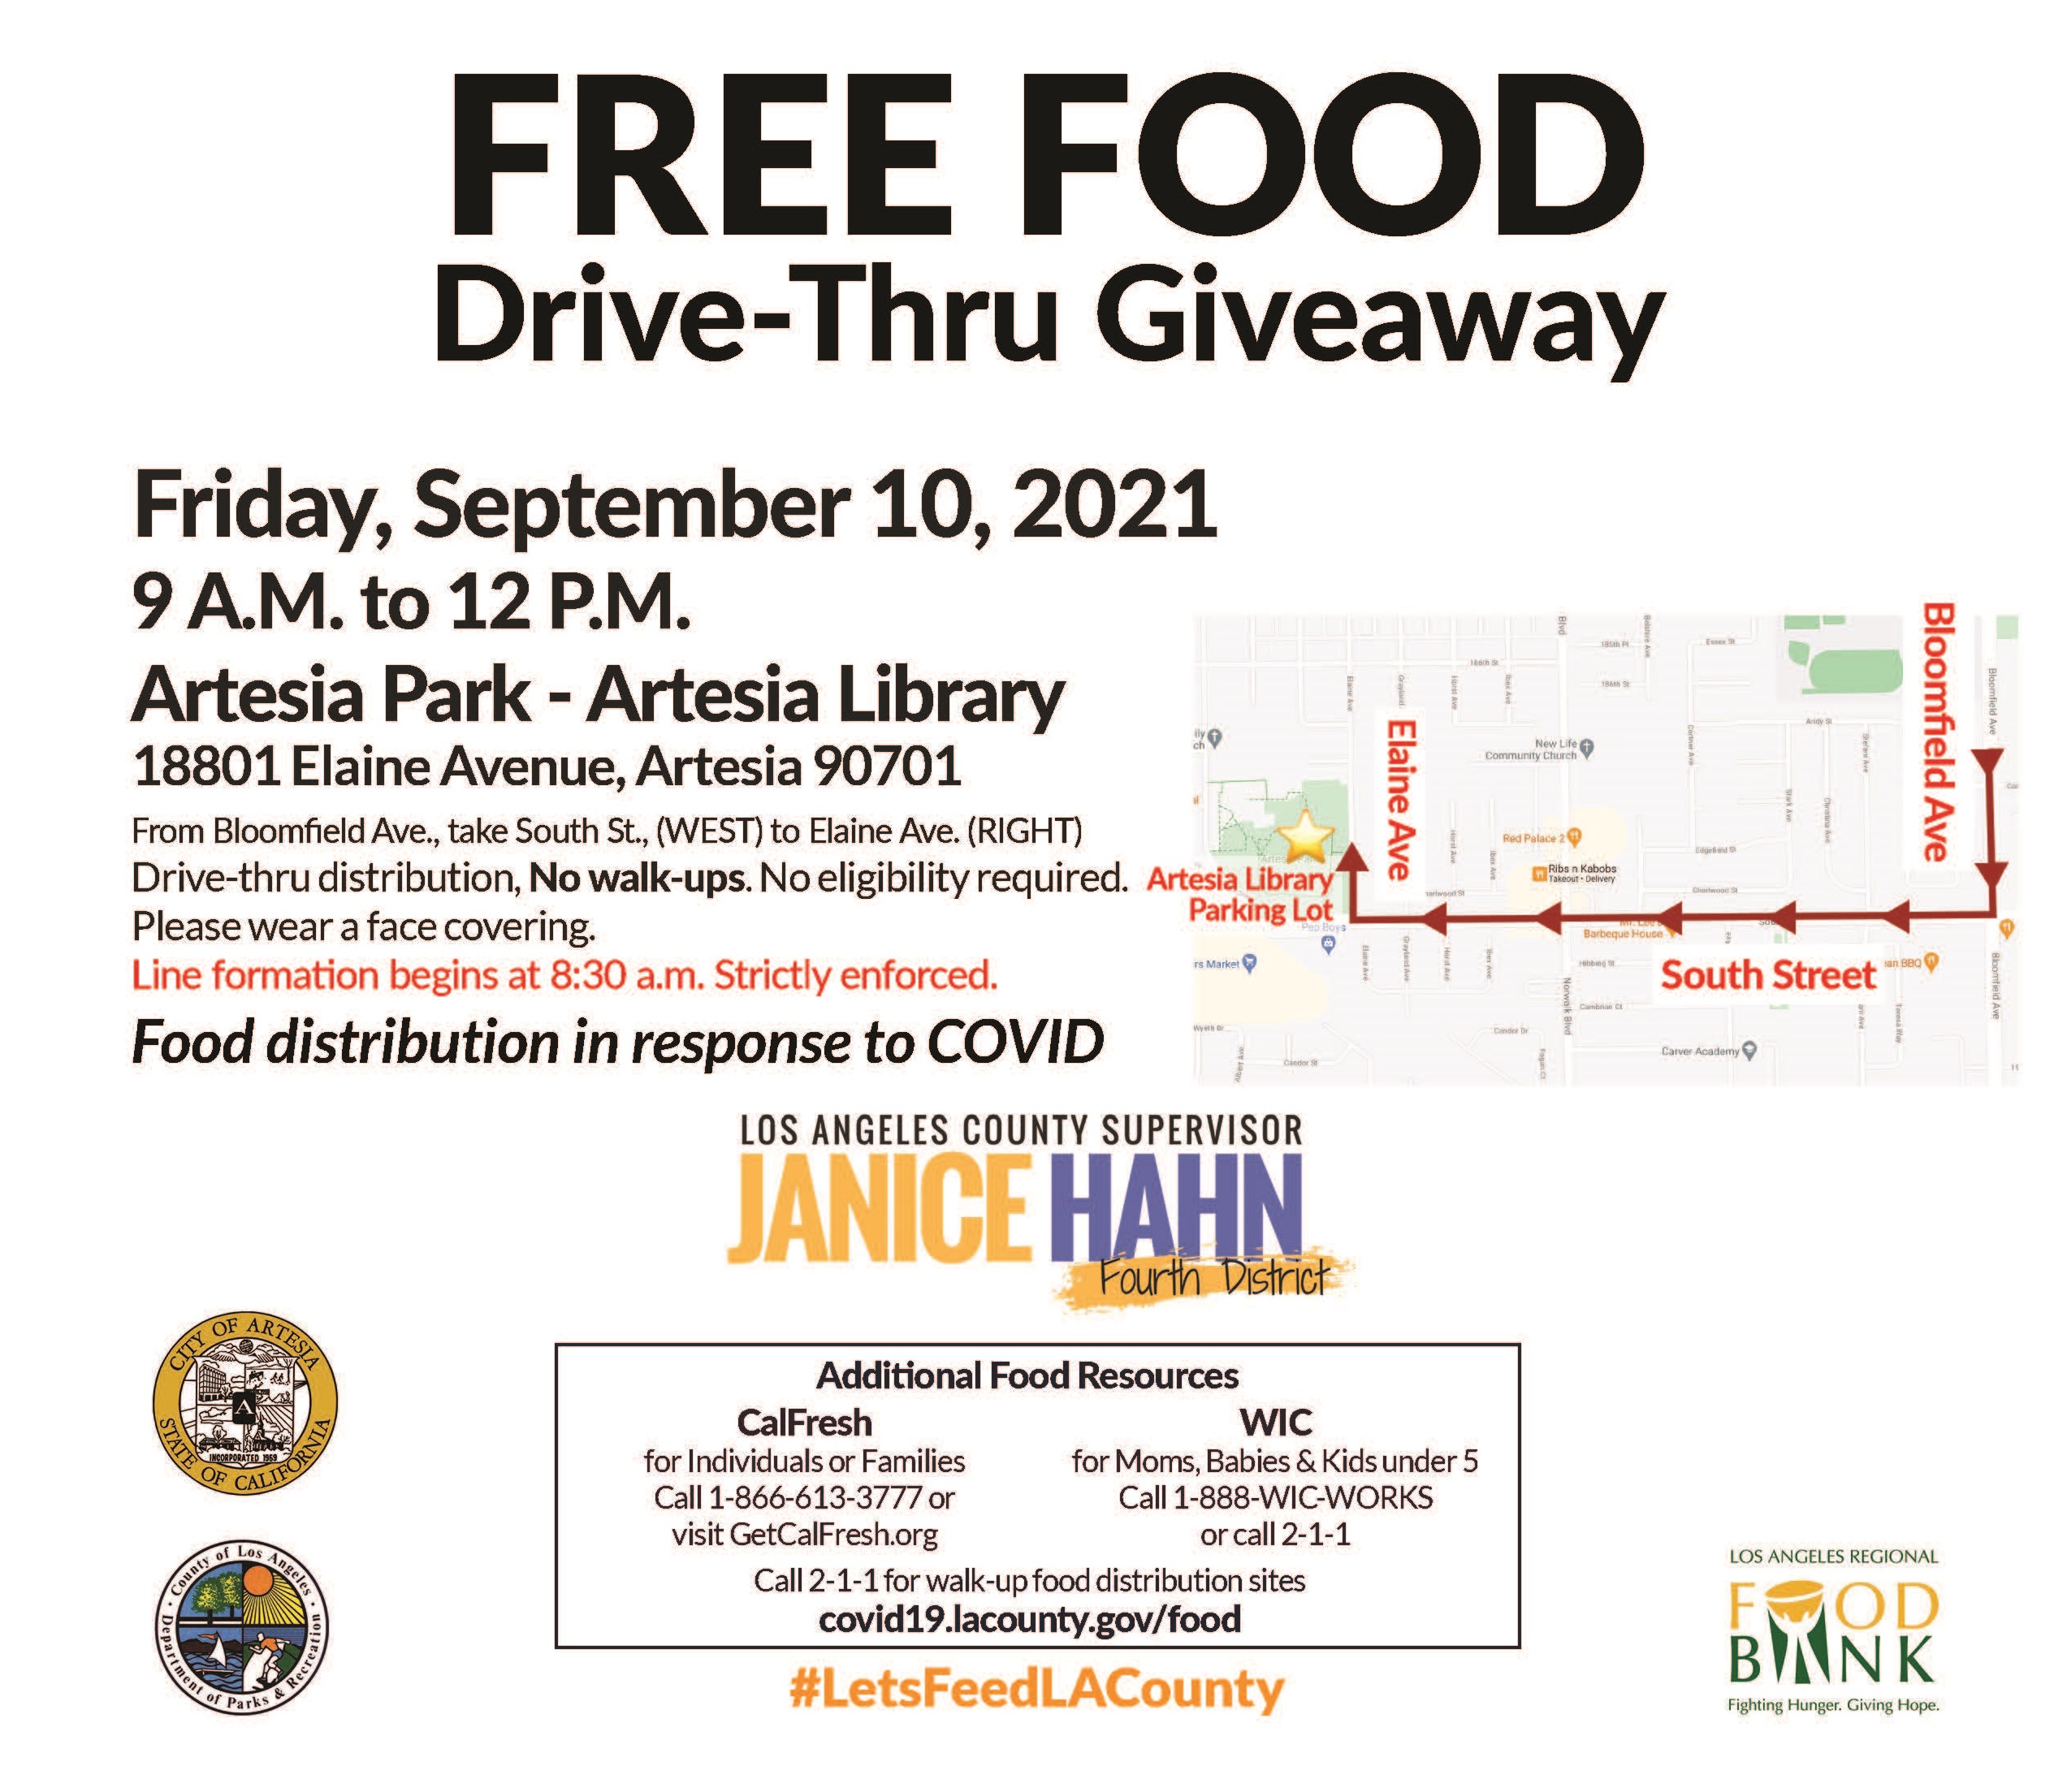 free-drive-thru-food-giveaway-artesia-park-artesia-library-county